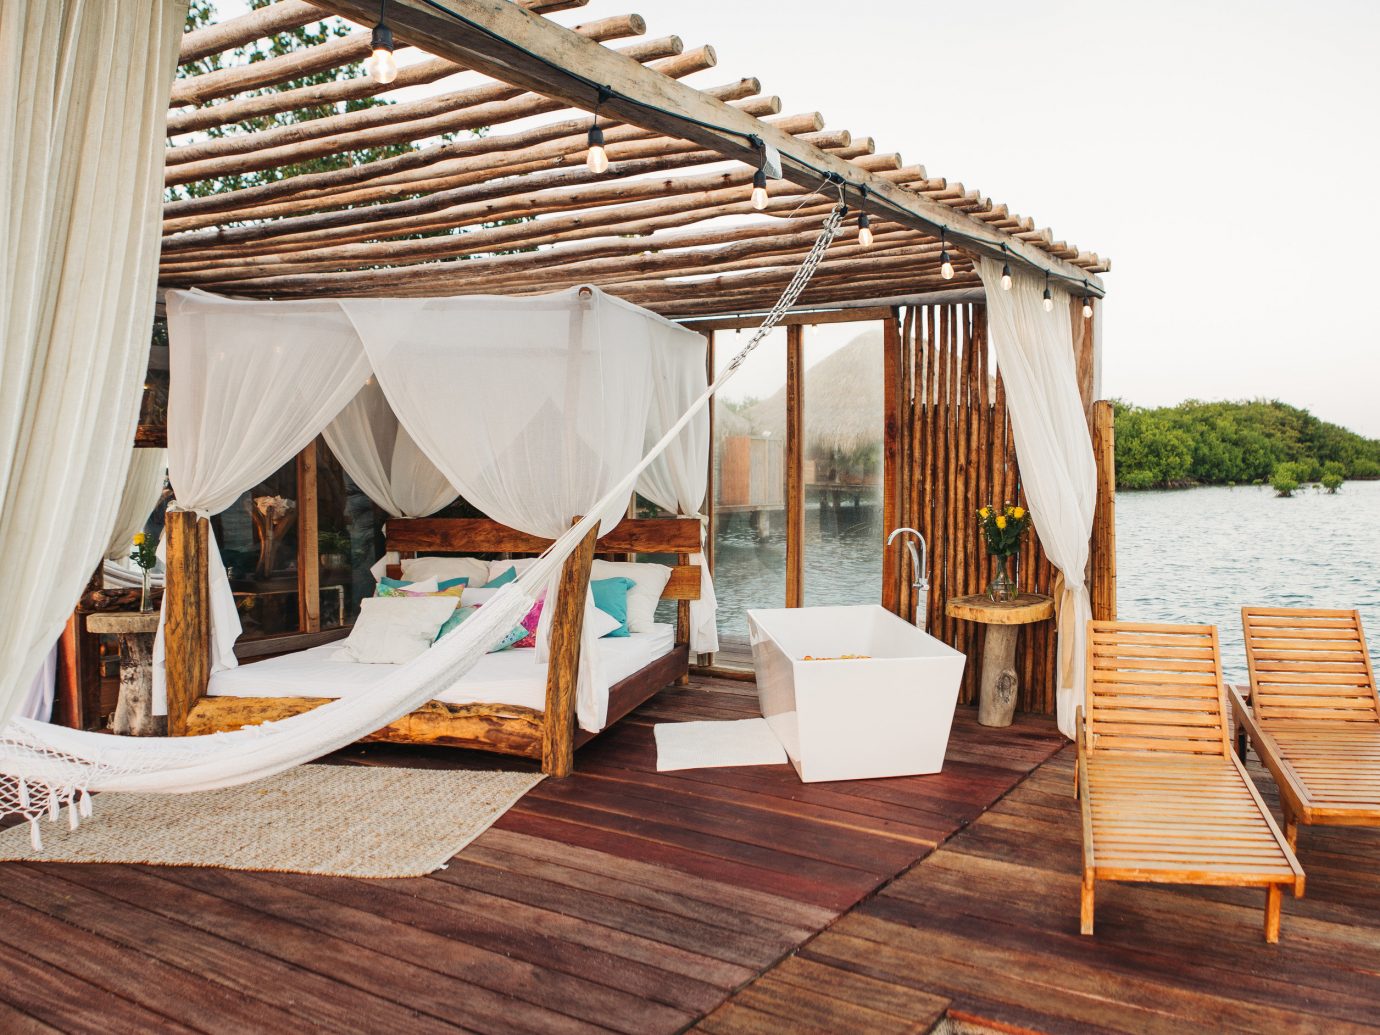 Aruba caribbean Hotels furniture outdoor furniture sunlounger wood vacation Resort tent outdoor structure